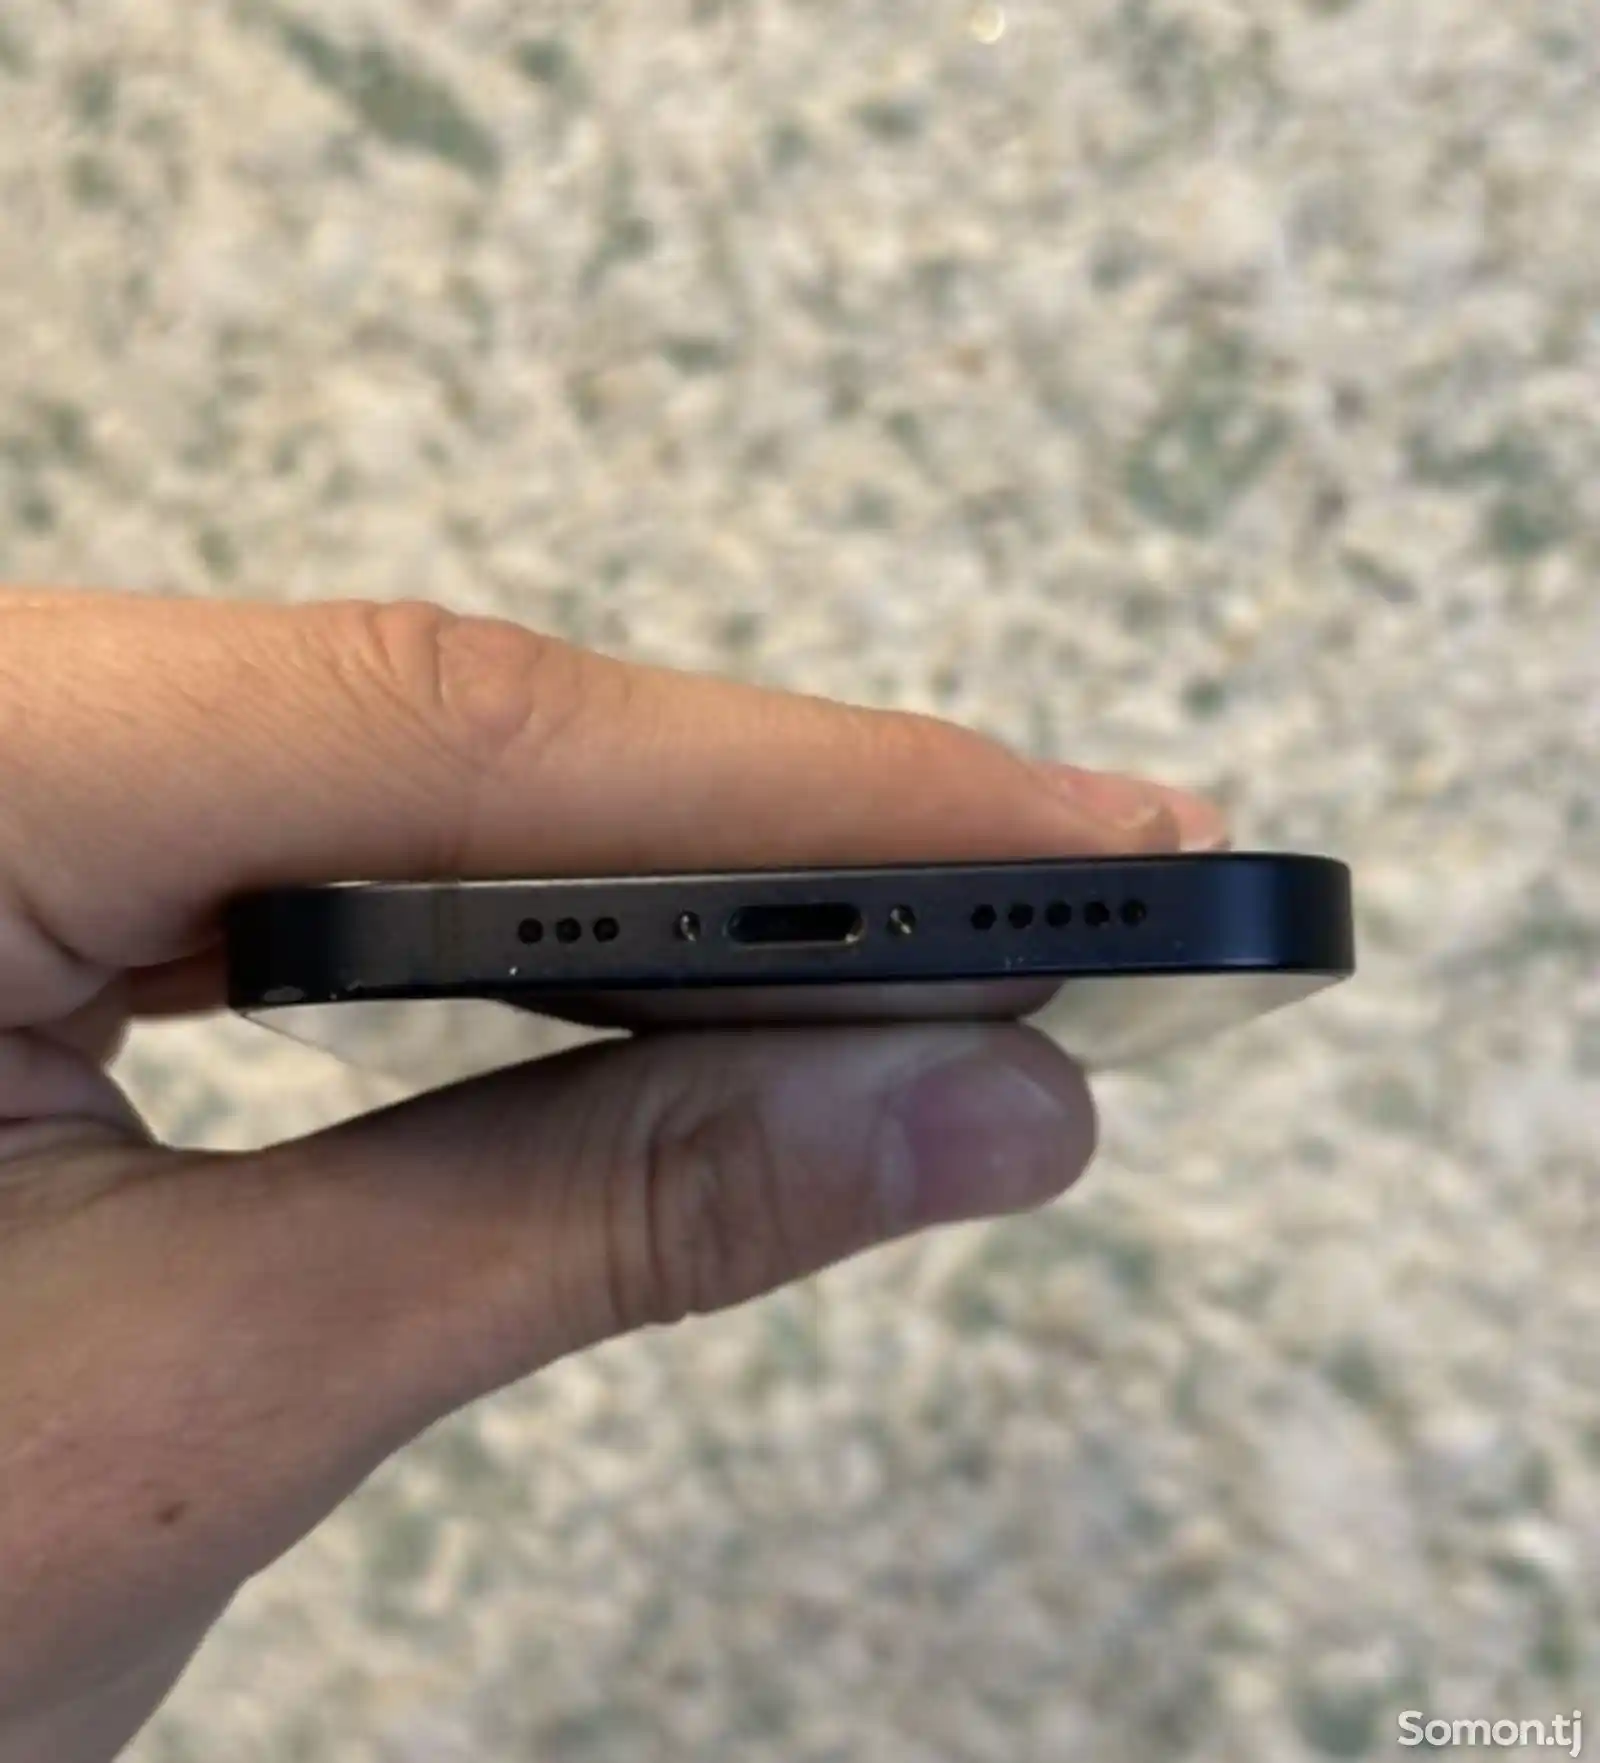 Apple iPhone 12, 128 gb, Black-4